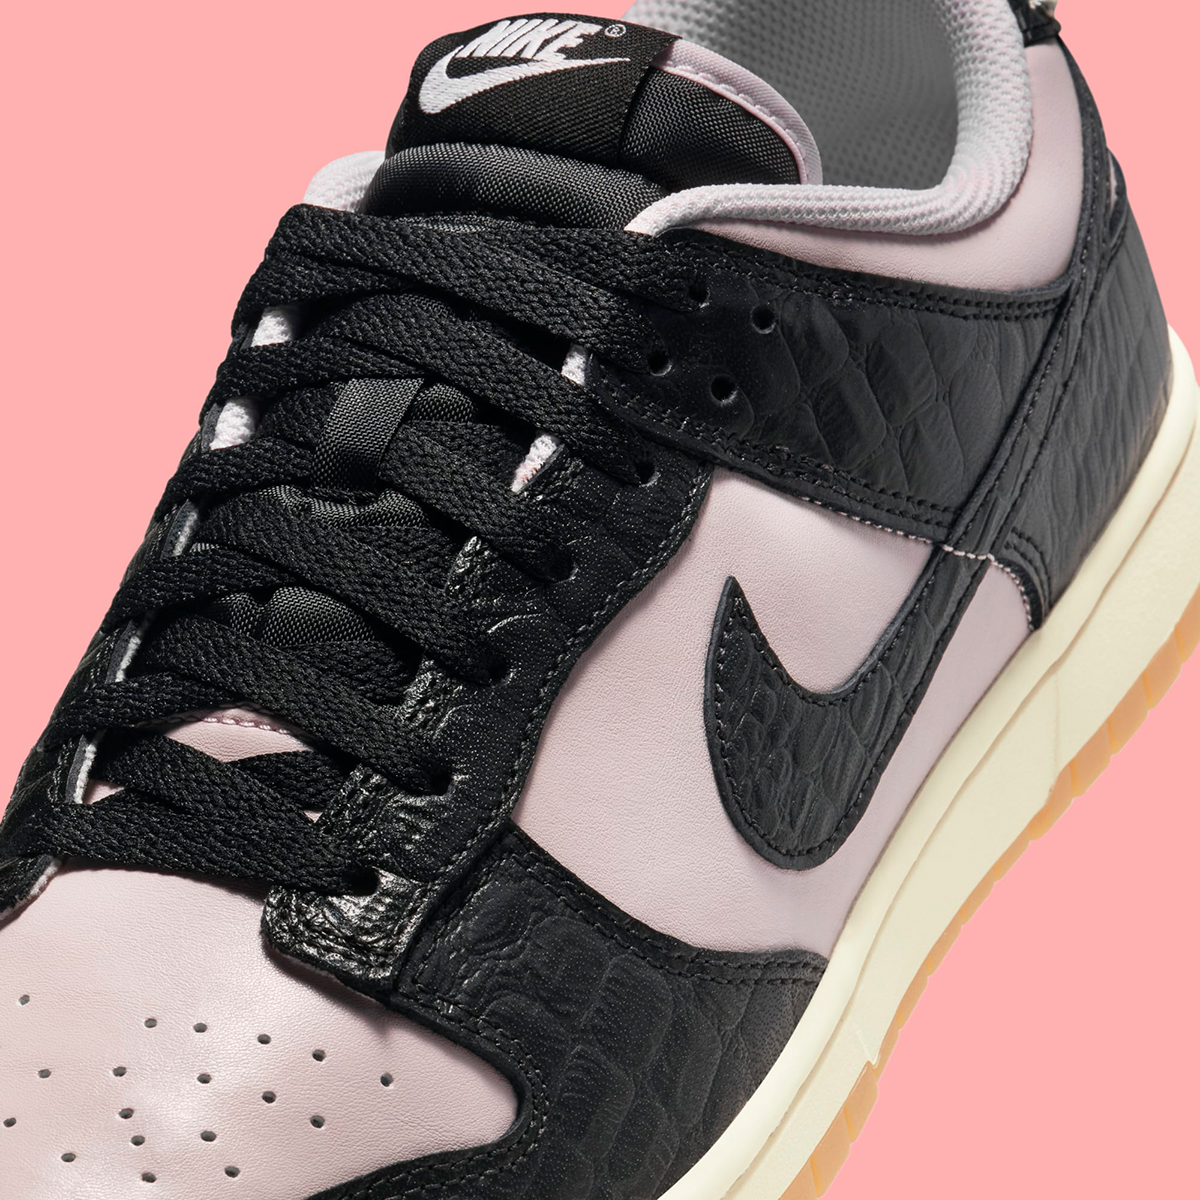 Nike Dunk Low Pink Oxford Croc Skin Gum Release Date 5